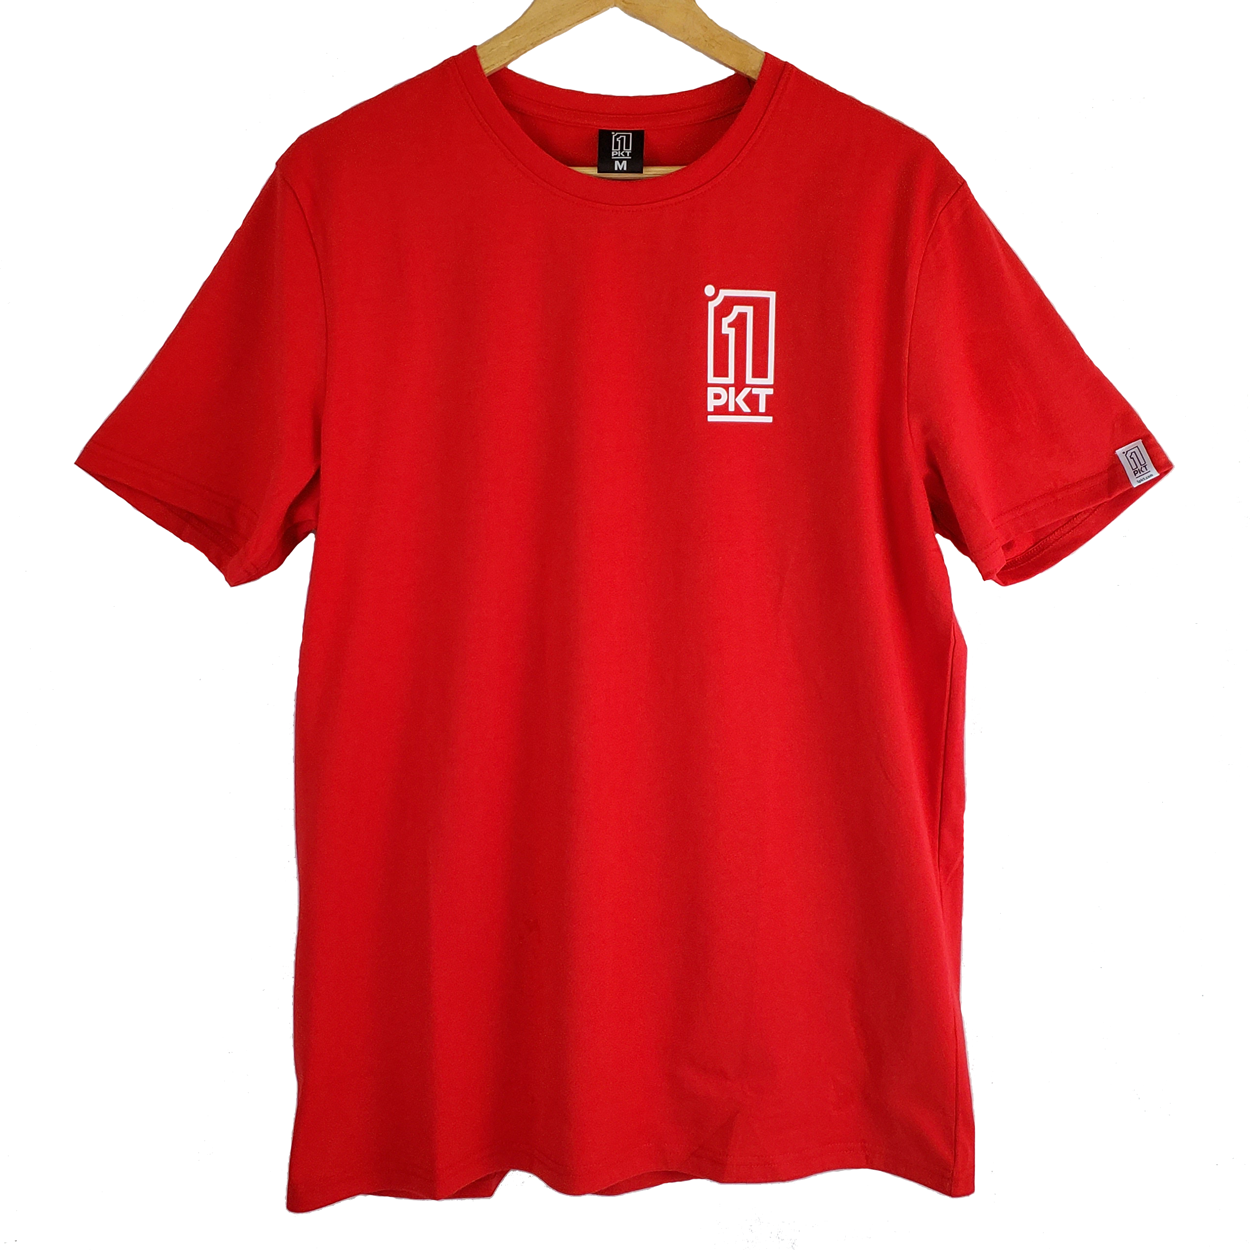 Red 1PKT Classic Fit T-Shirt - 1PKT